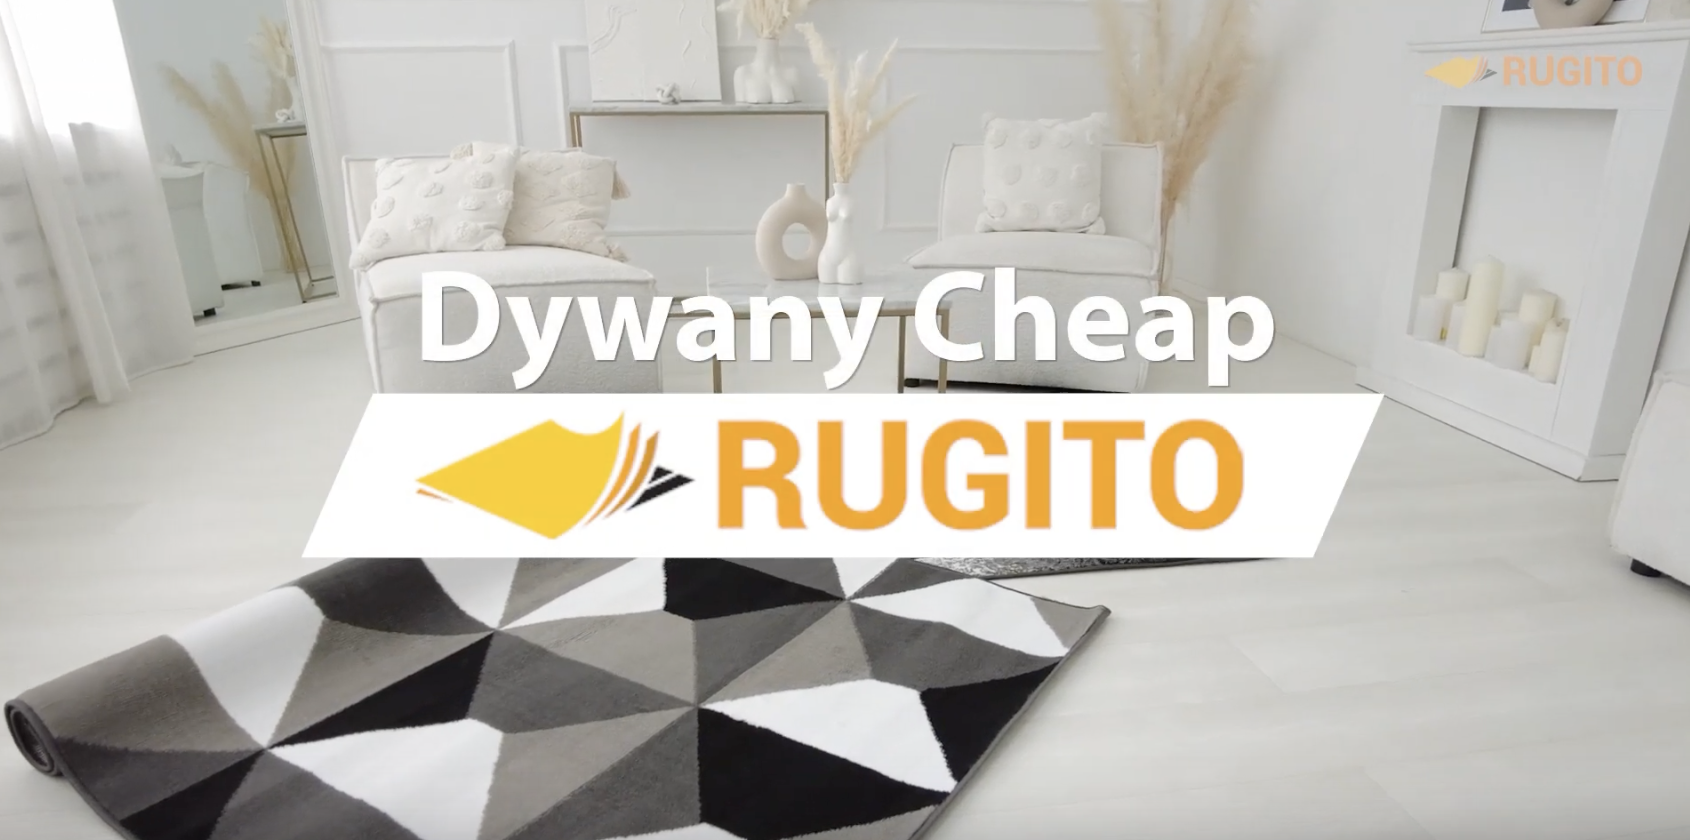 Dywany Cheap - rugito.pl - Rugito Radosław Bartosik